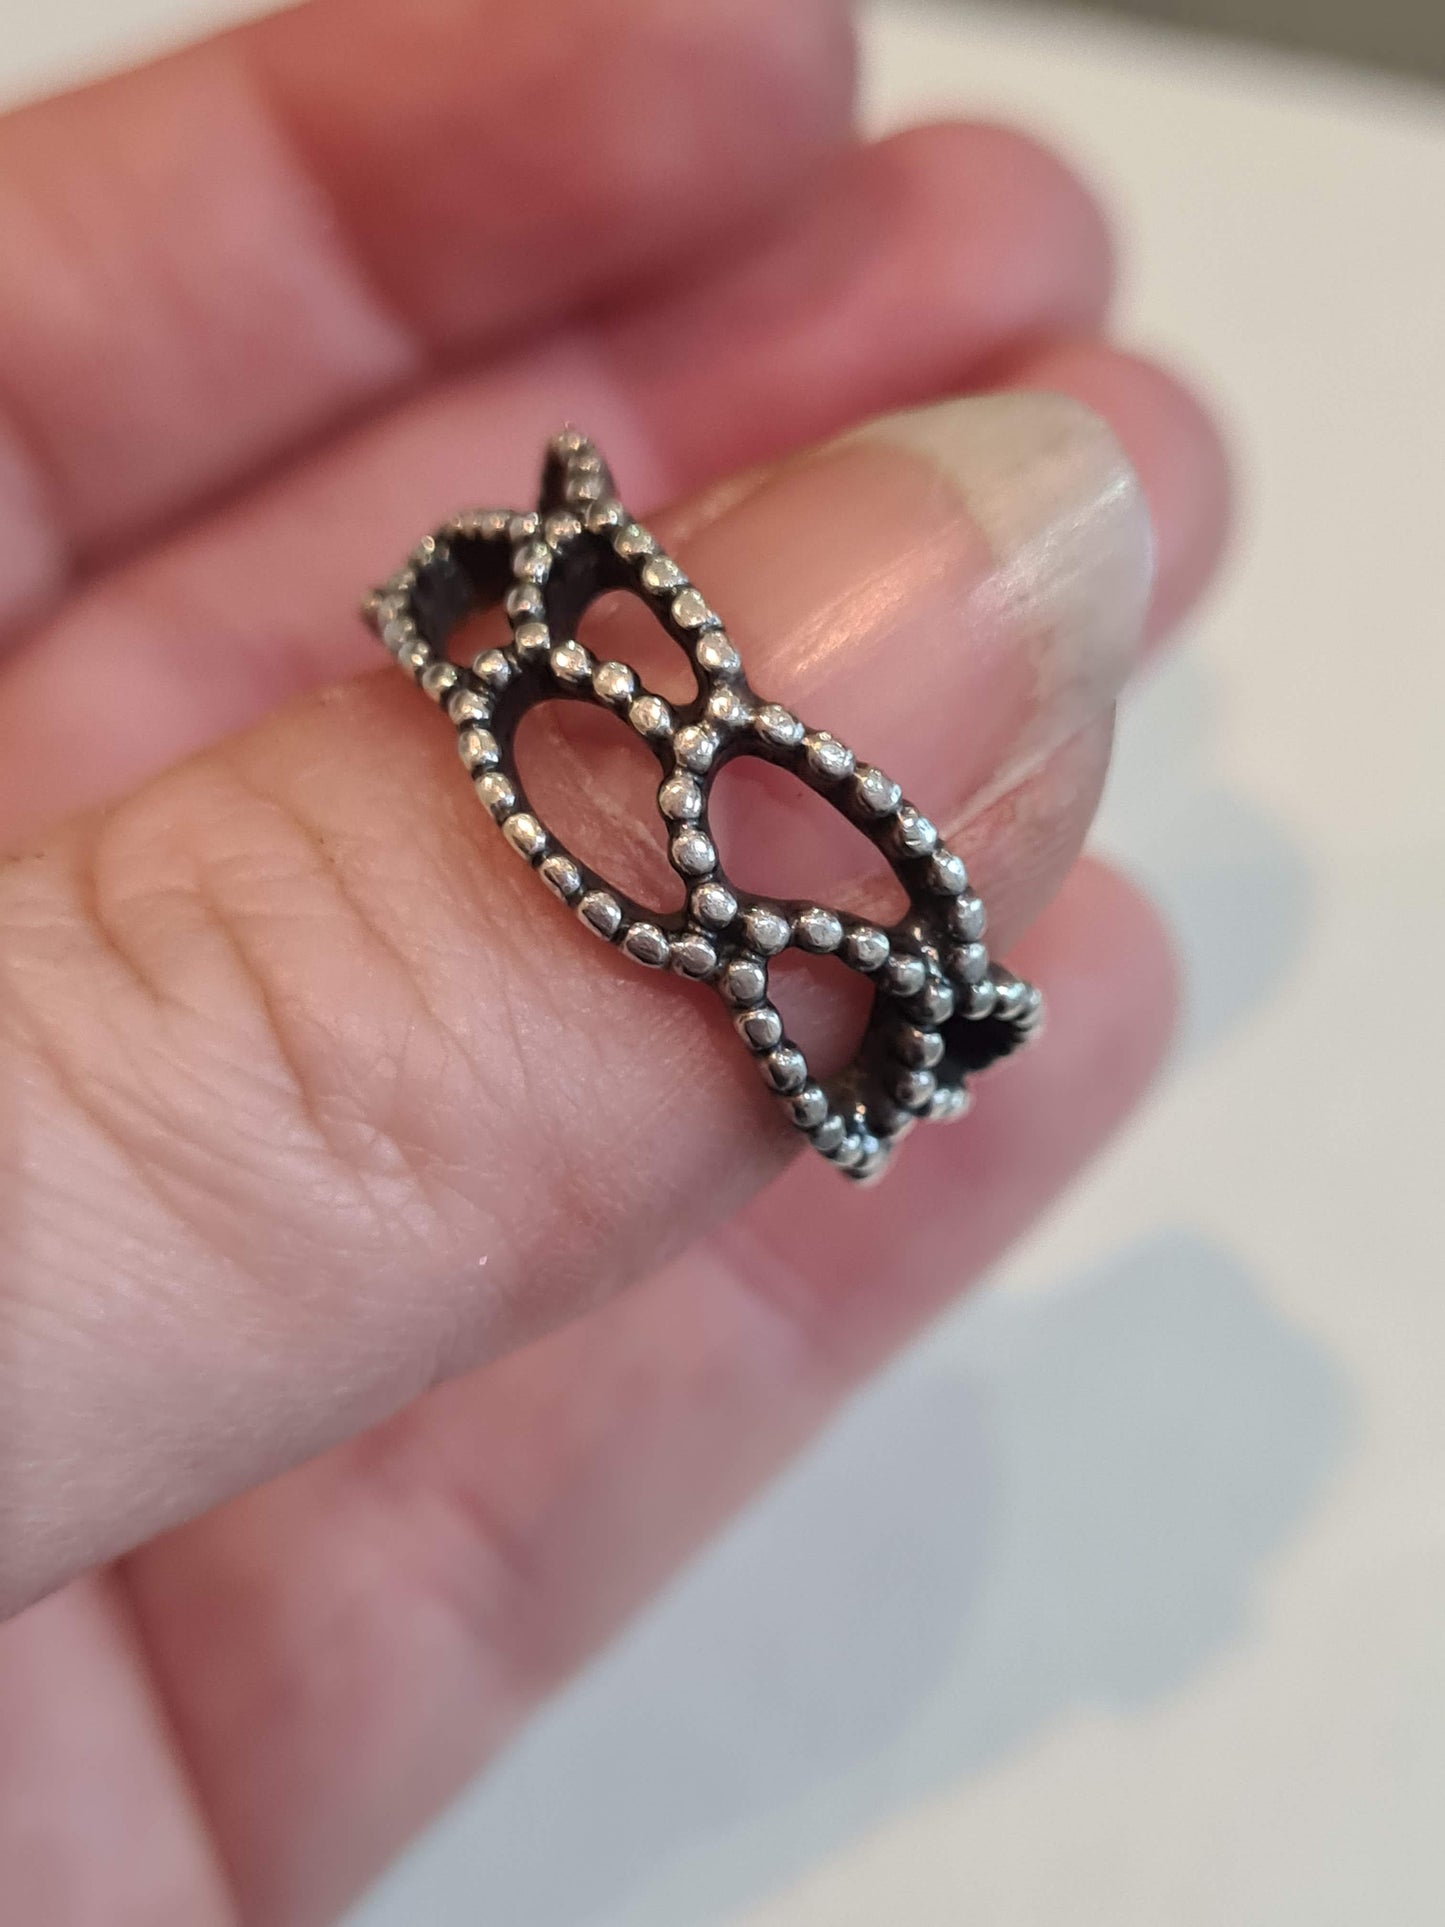 Genuine Pandora Black Stone Ring MI AMOR Heart Gothic Statement Size 60